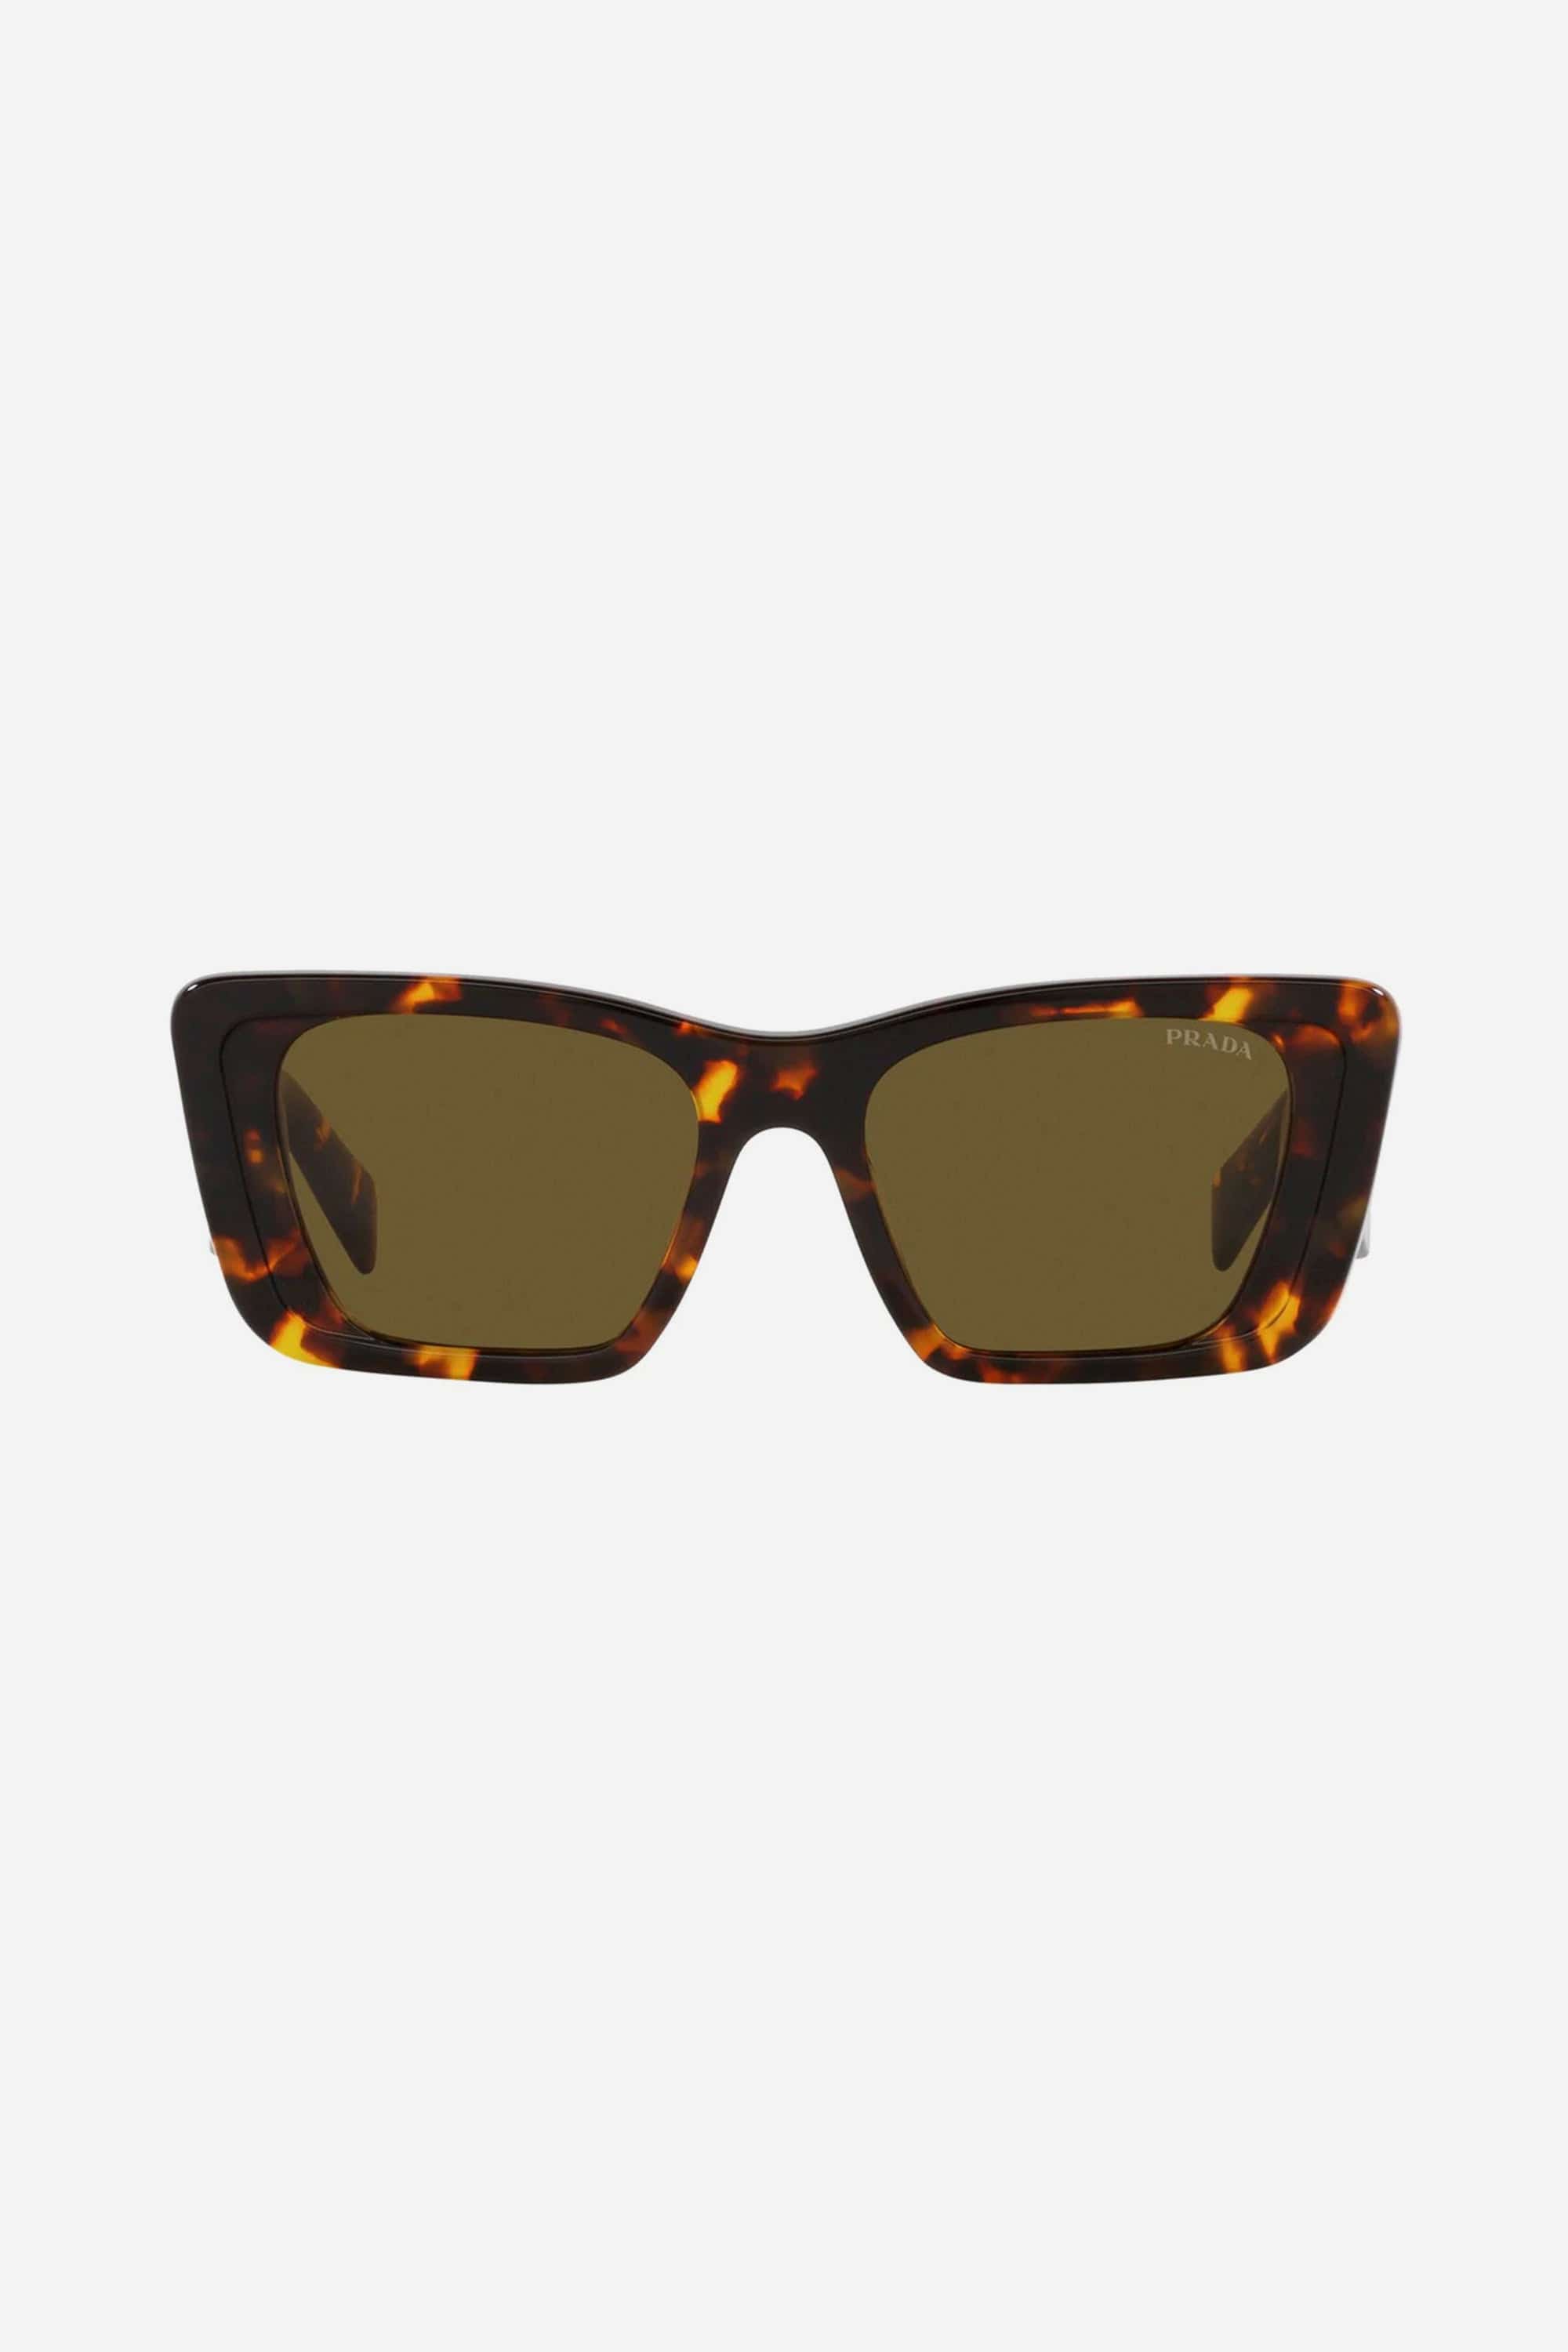 Prada cat-eye havana sunglasses lo - Eyewear Club